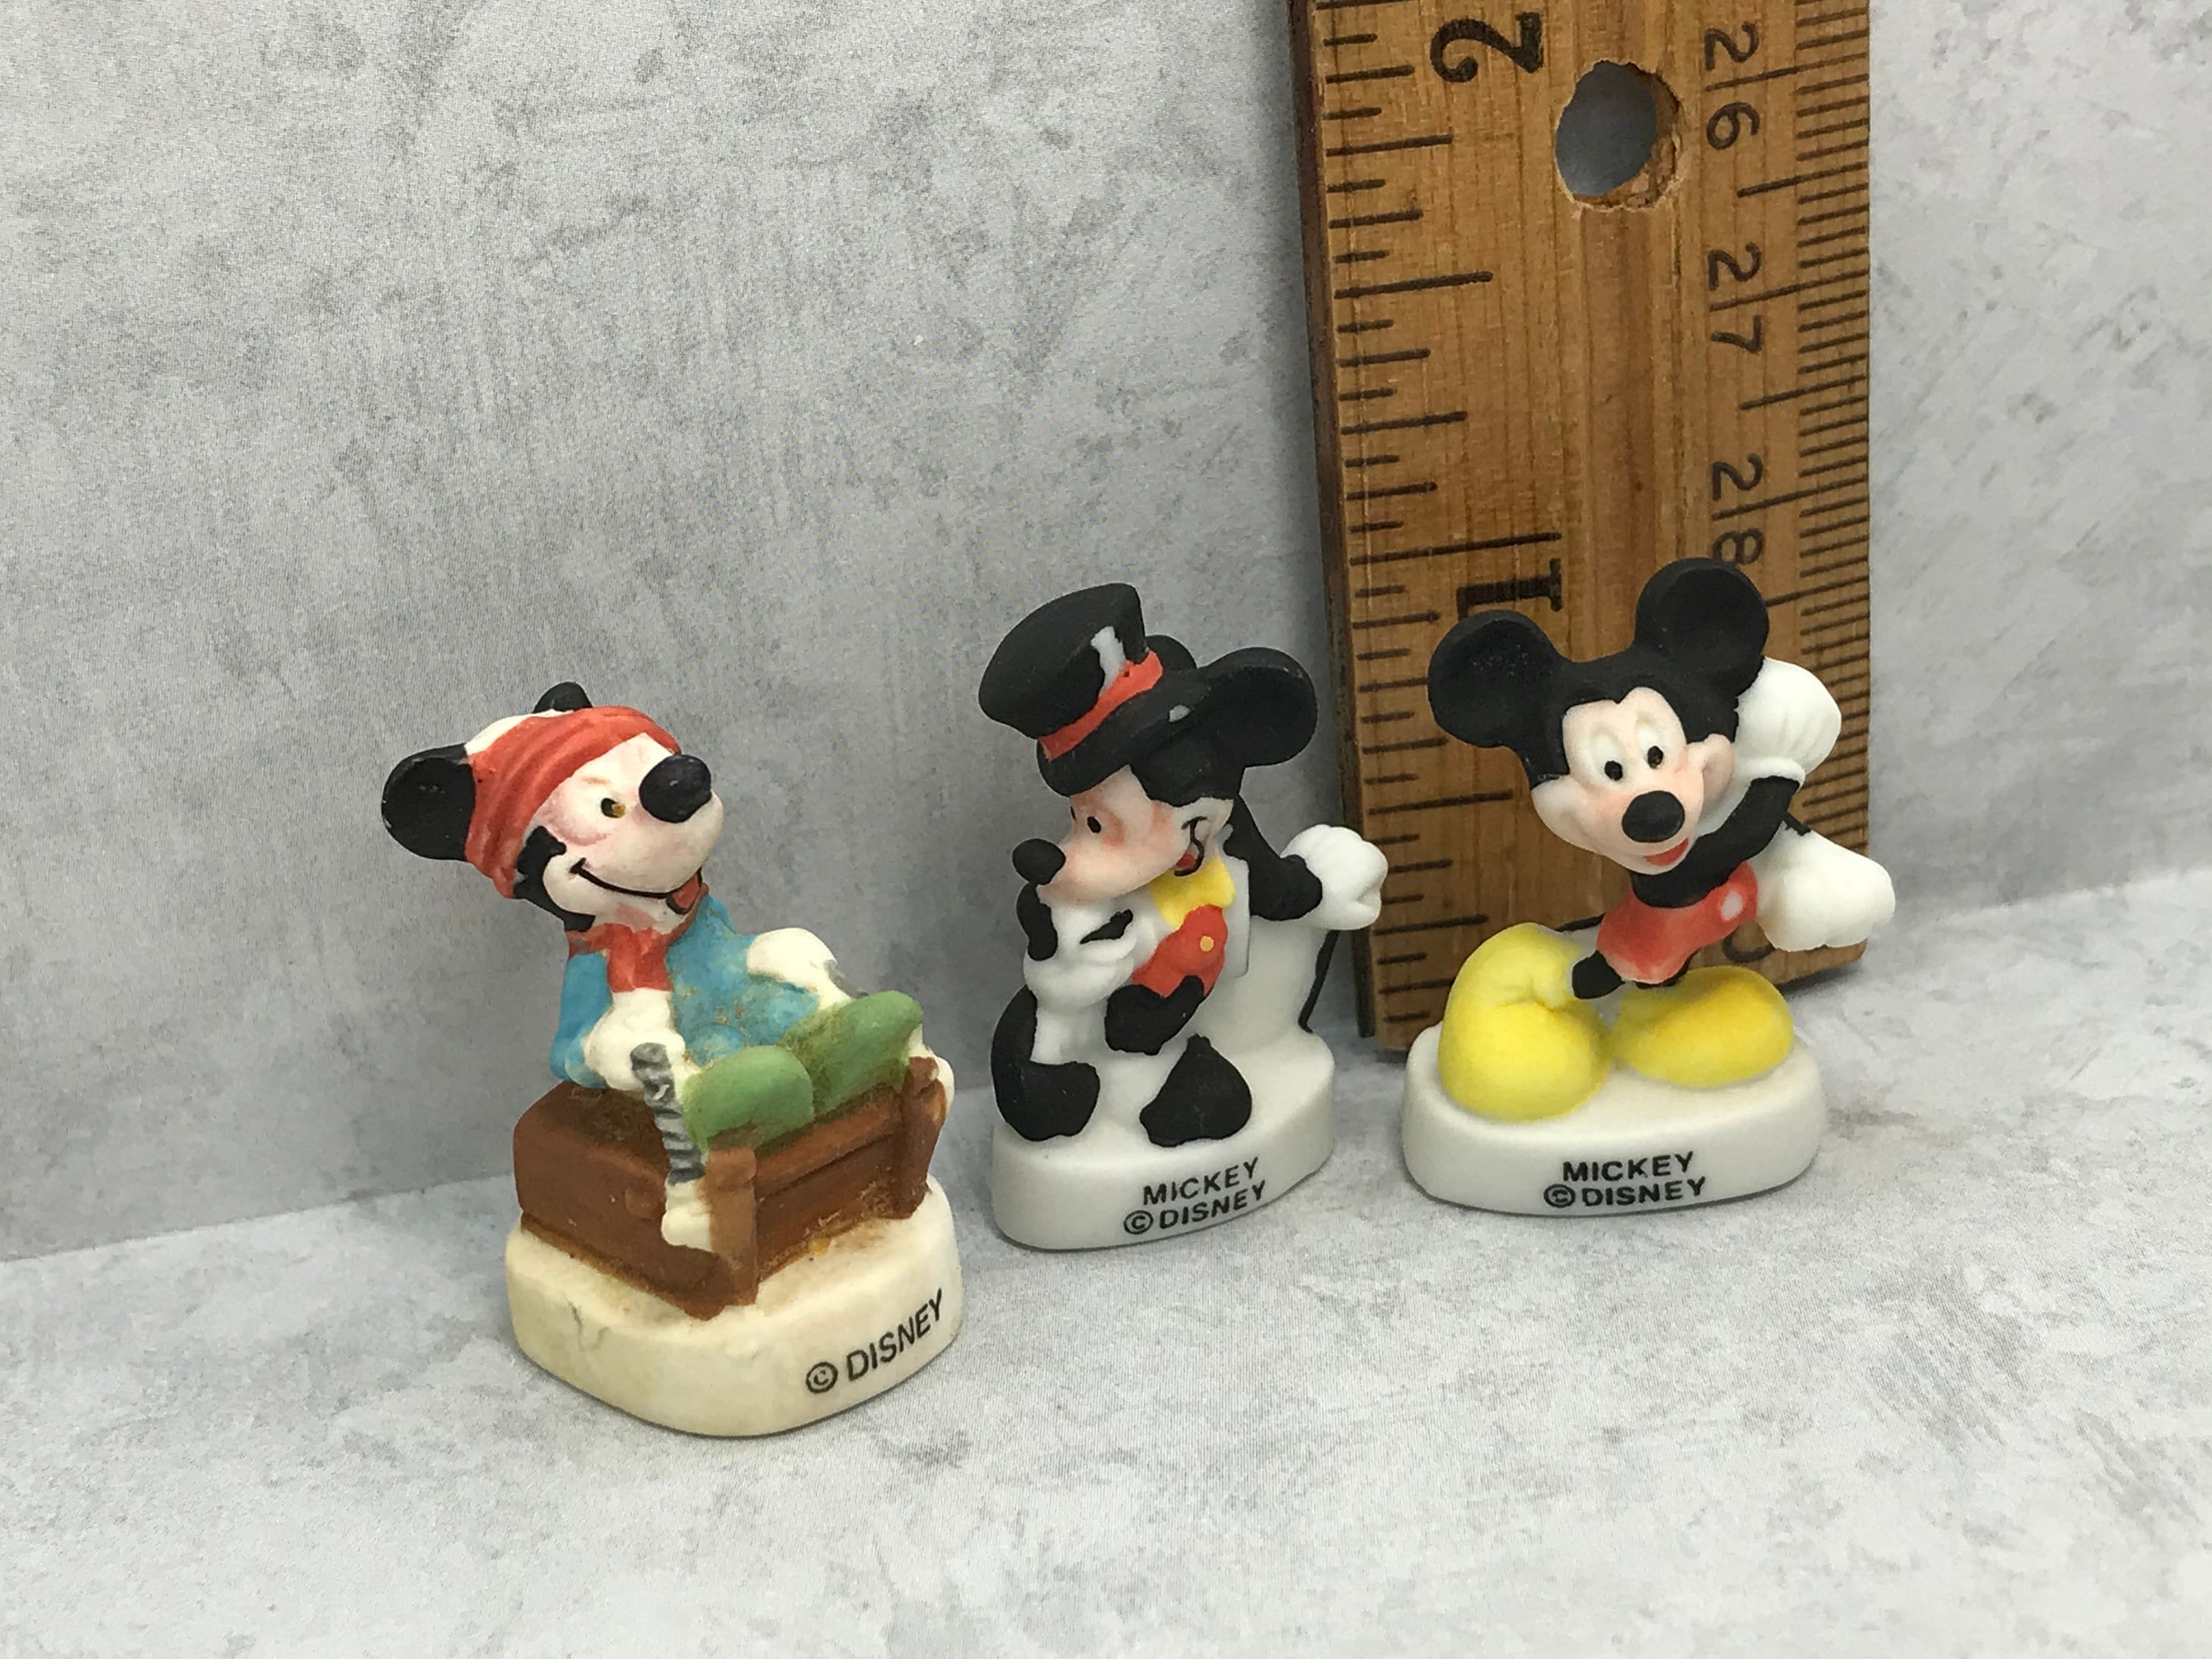 Vintage Miniature Figurine French Feve, Disney Mickey Mouse Figure